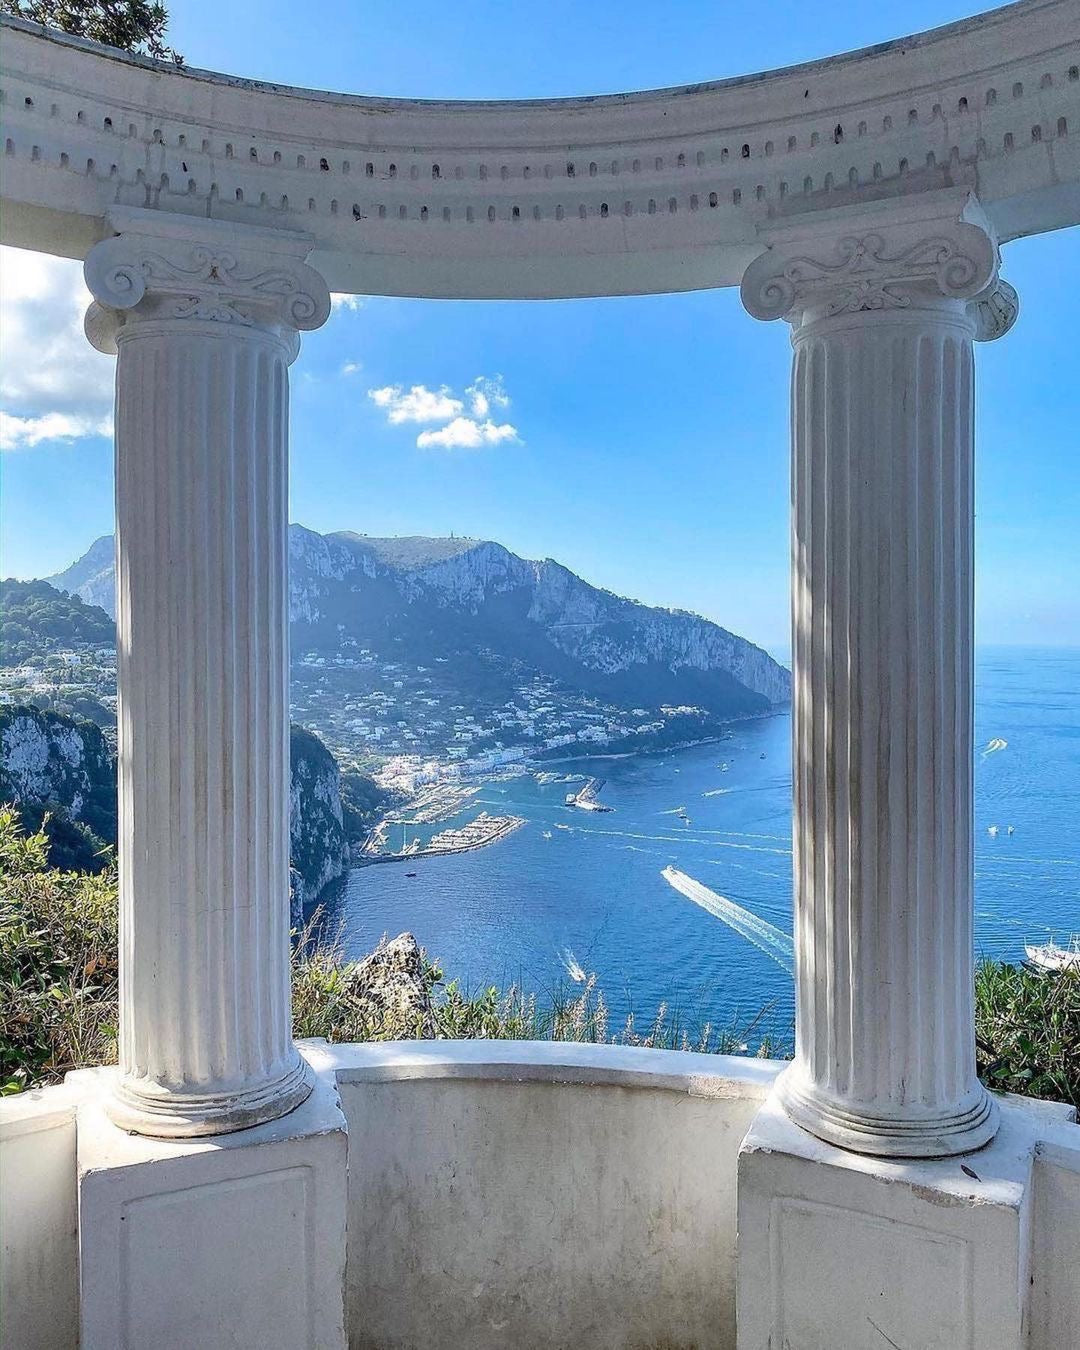 Villa Lysis in Capri, Italy